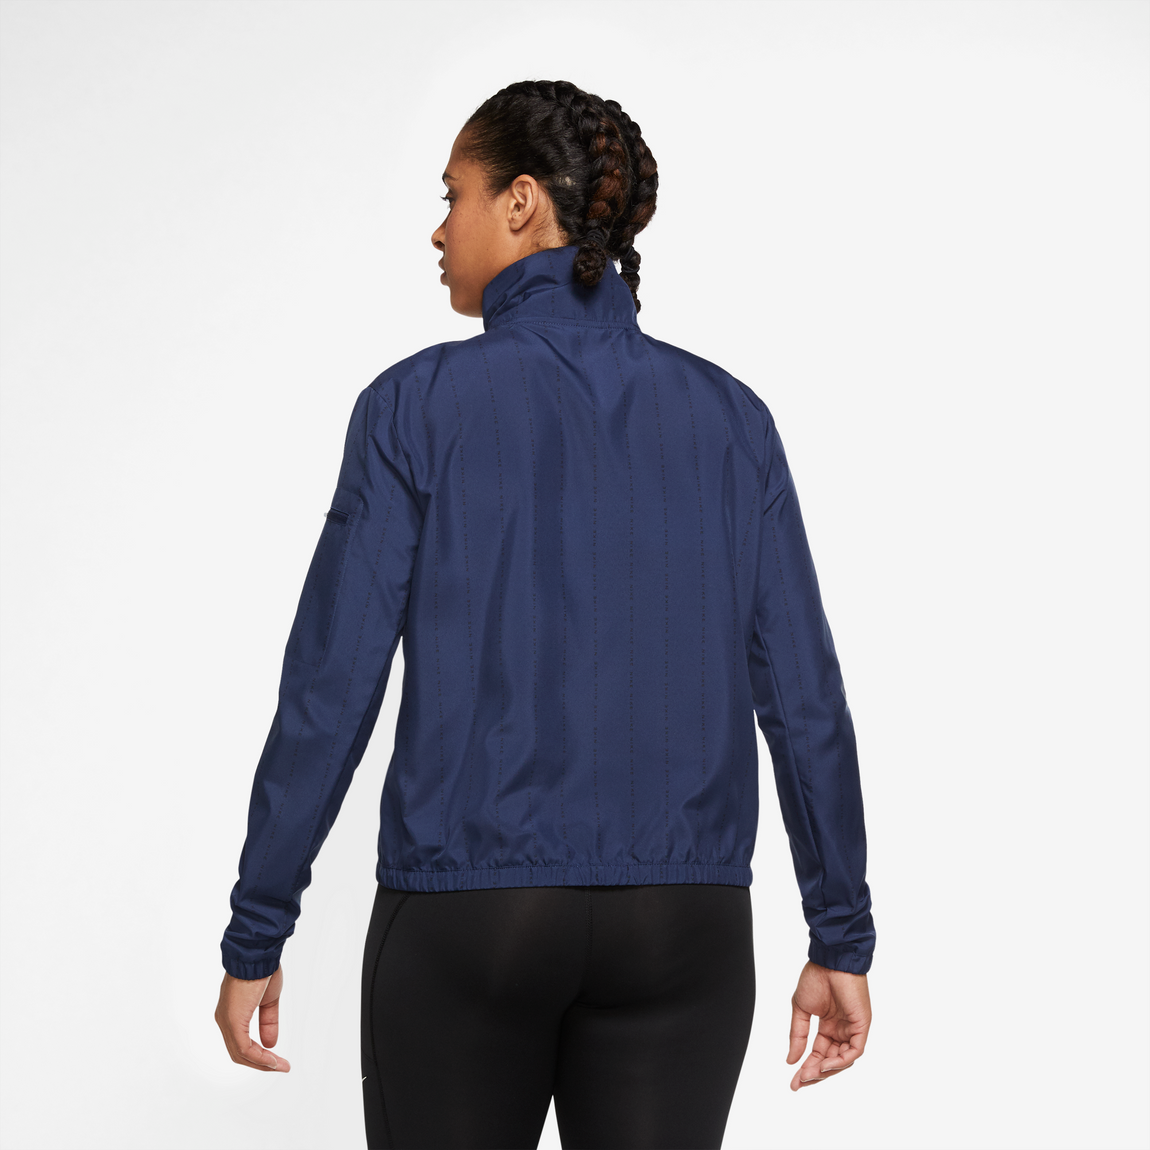 Nike Women's Dri-Fit Icon Clash Jacket (Midnight Navy/Black) - Nike Women's Dri-Fit Icon Clash Jacket (Midnight Navy/Black) - 